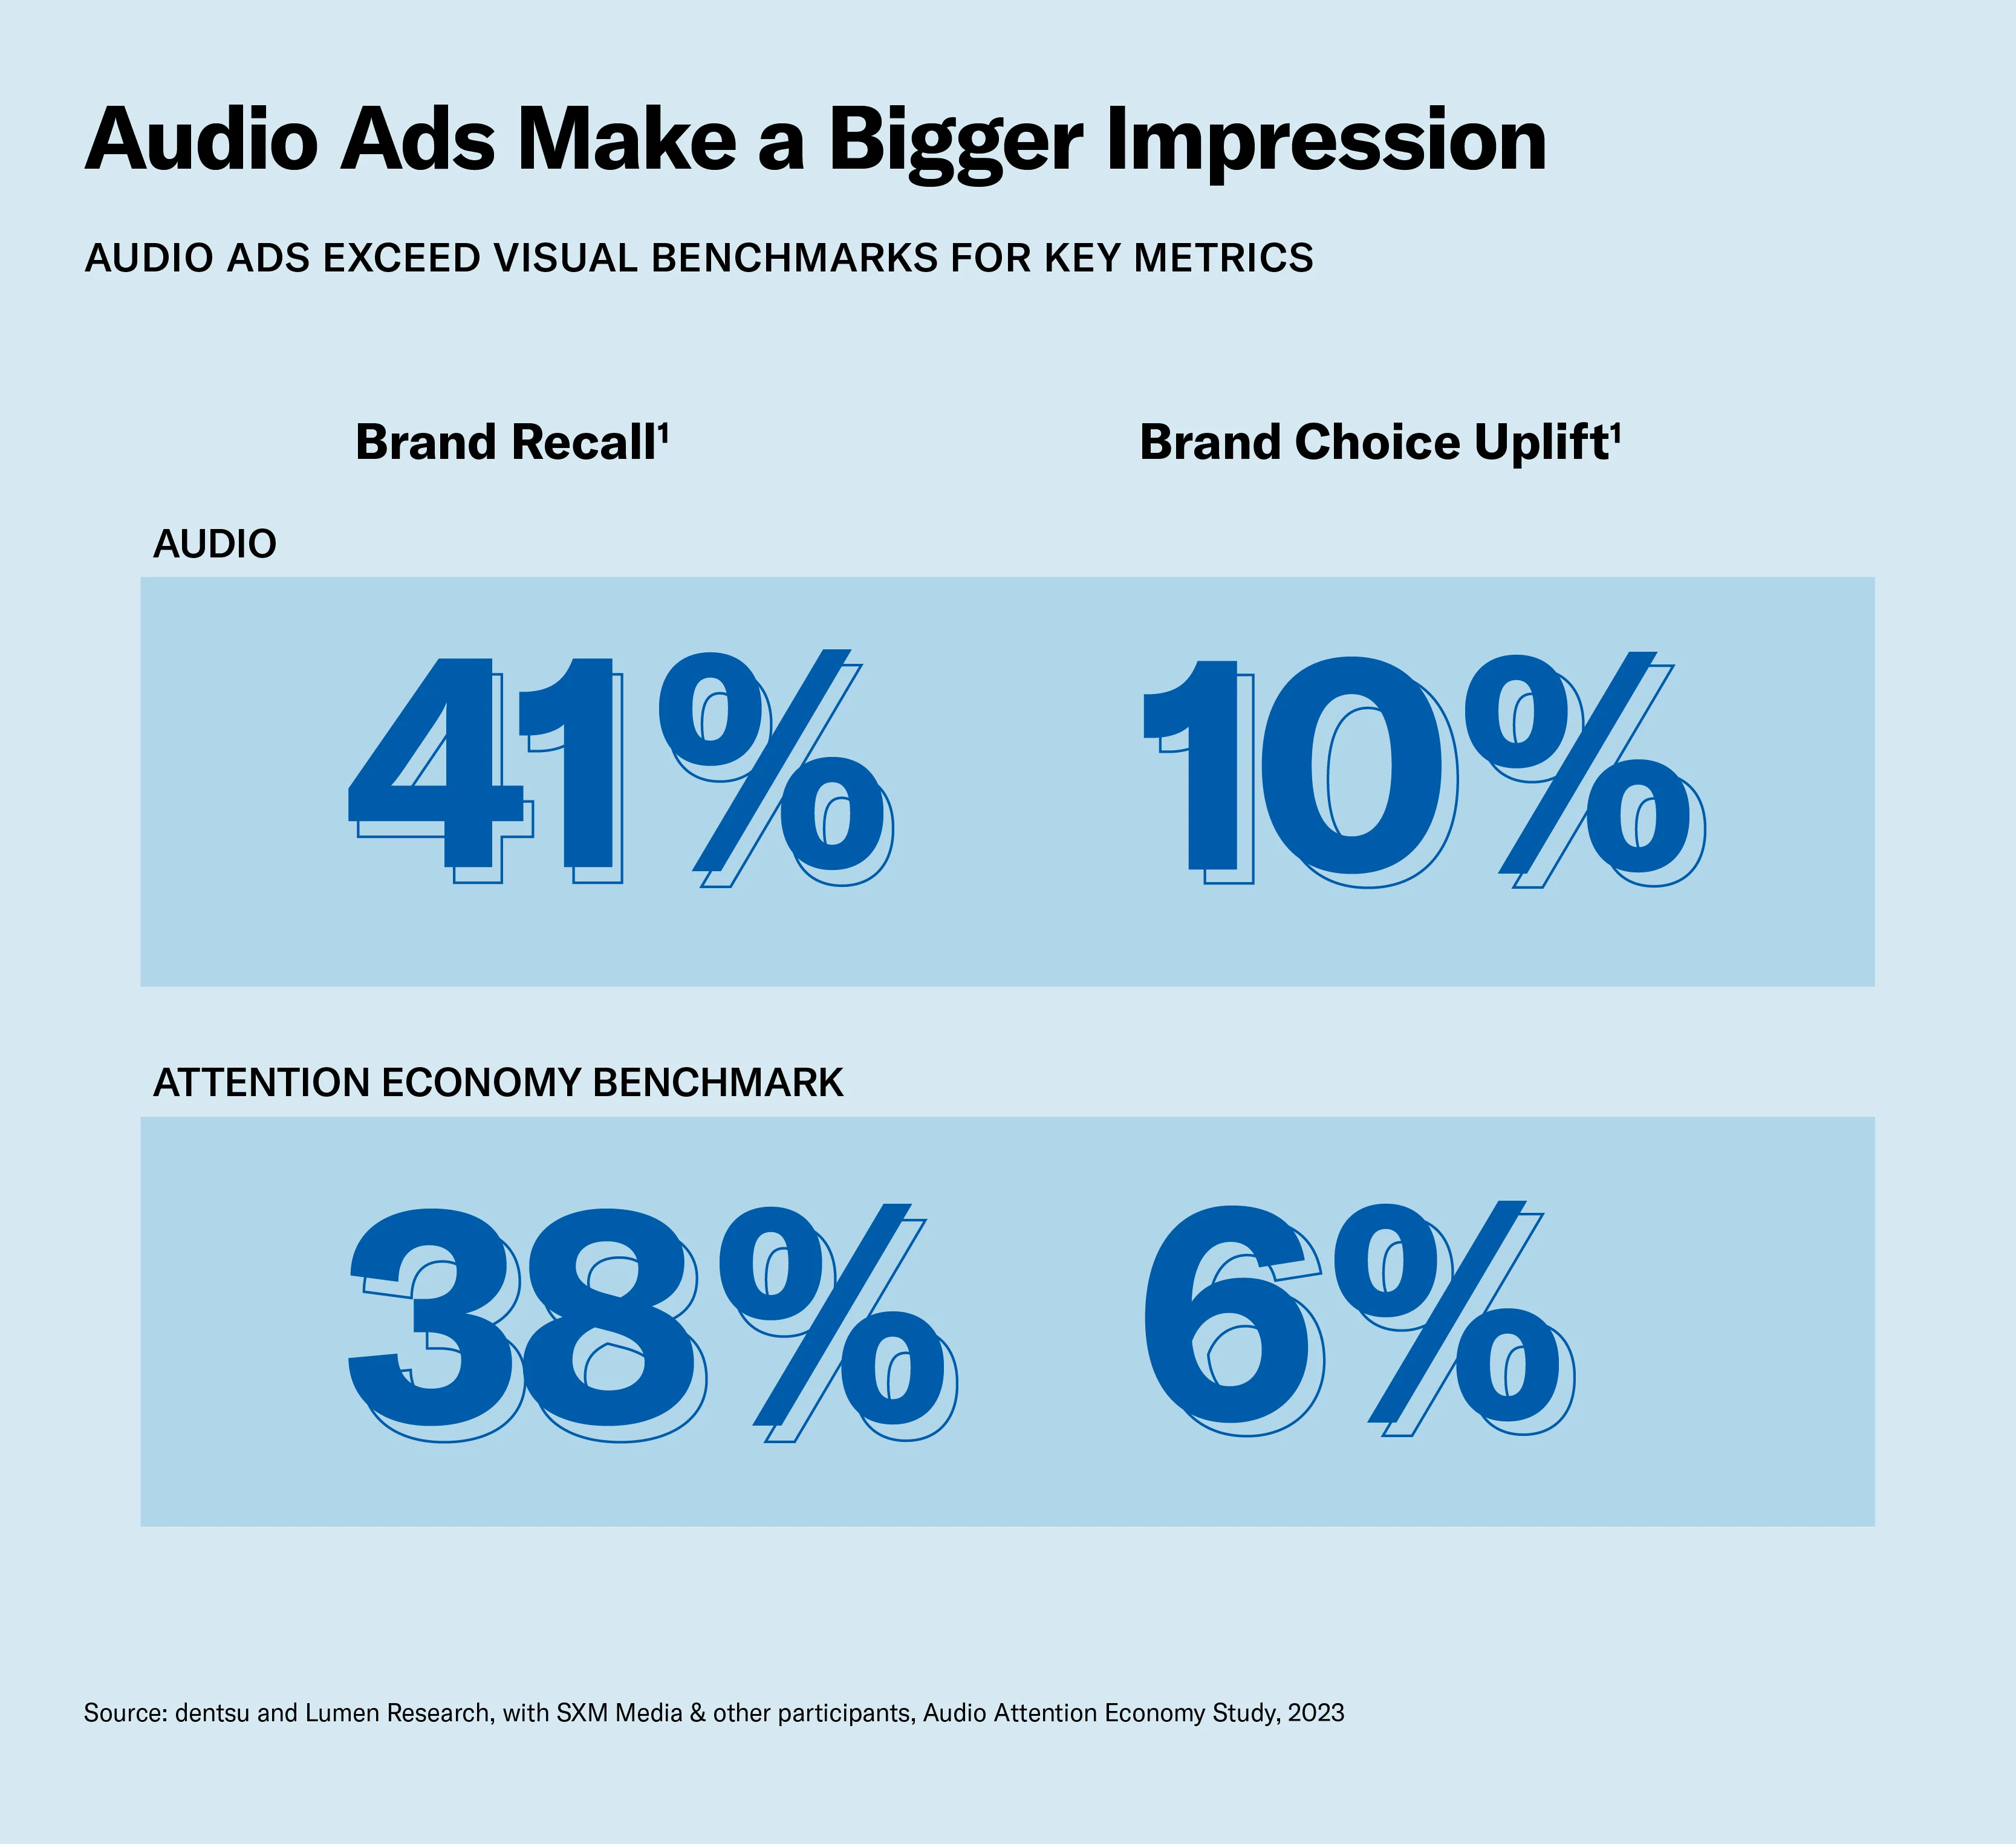 Audio ads make a bigger impression than visual ads